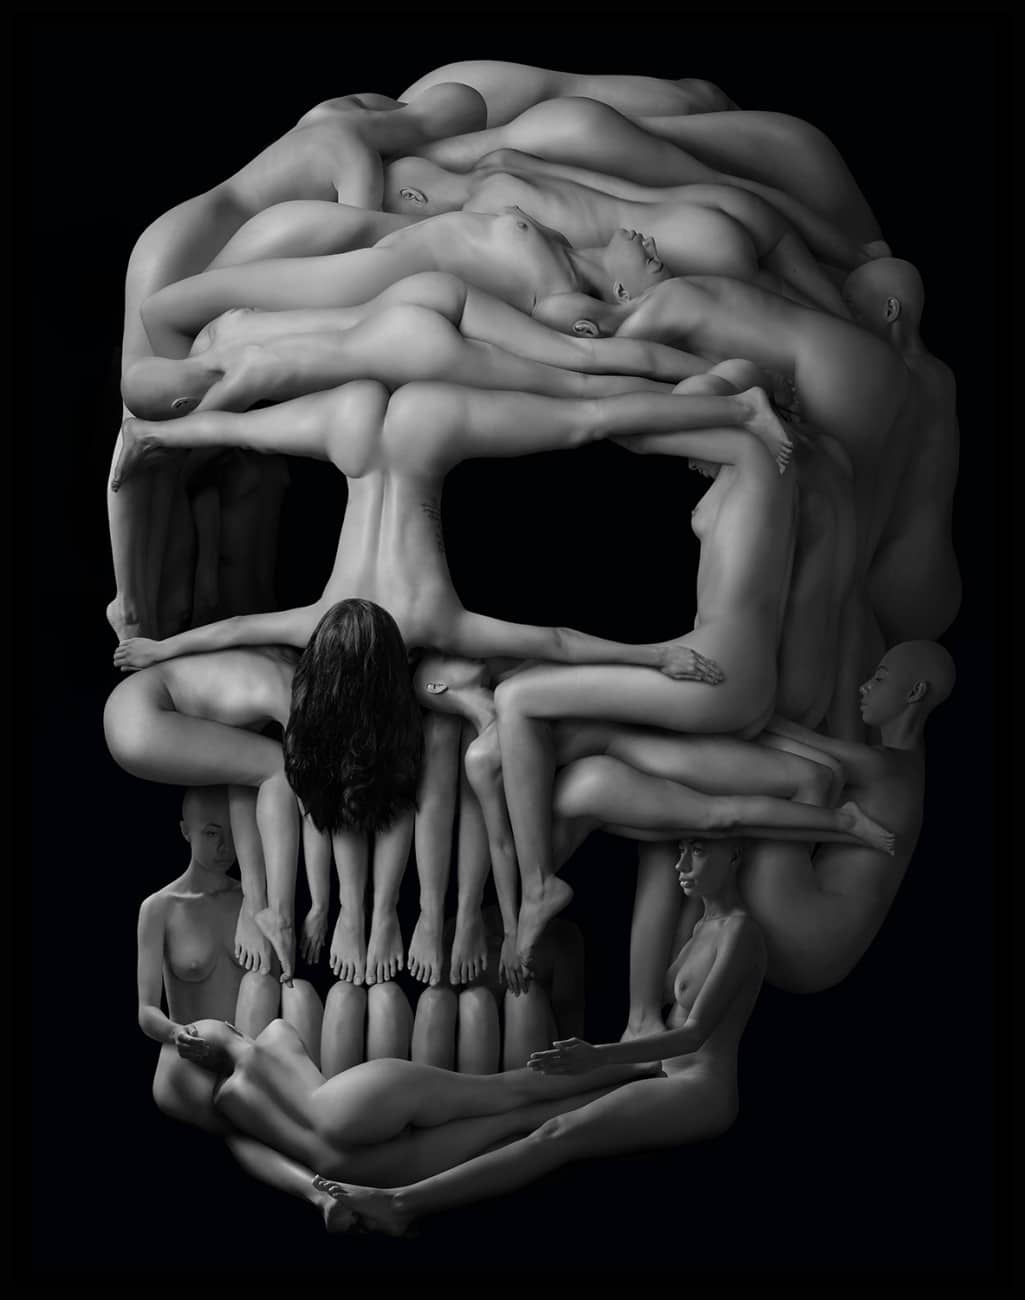 Nude Bodies Used to Make Up Human Skull by Alexander Sviridov